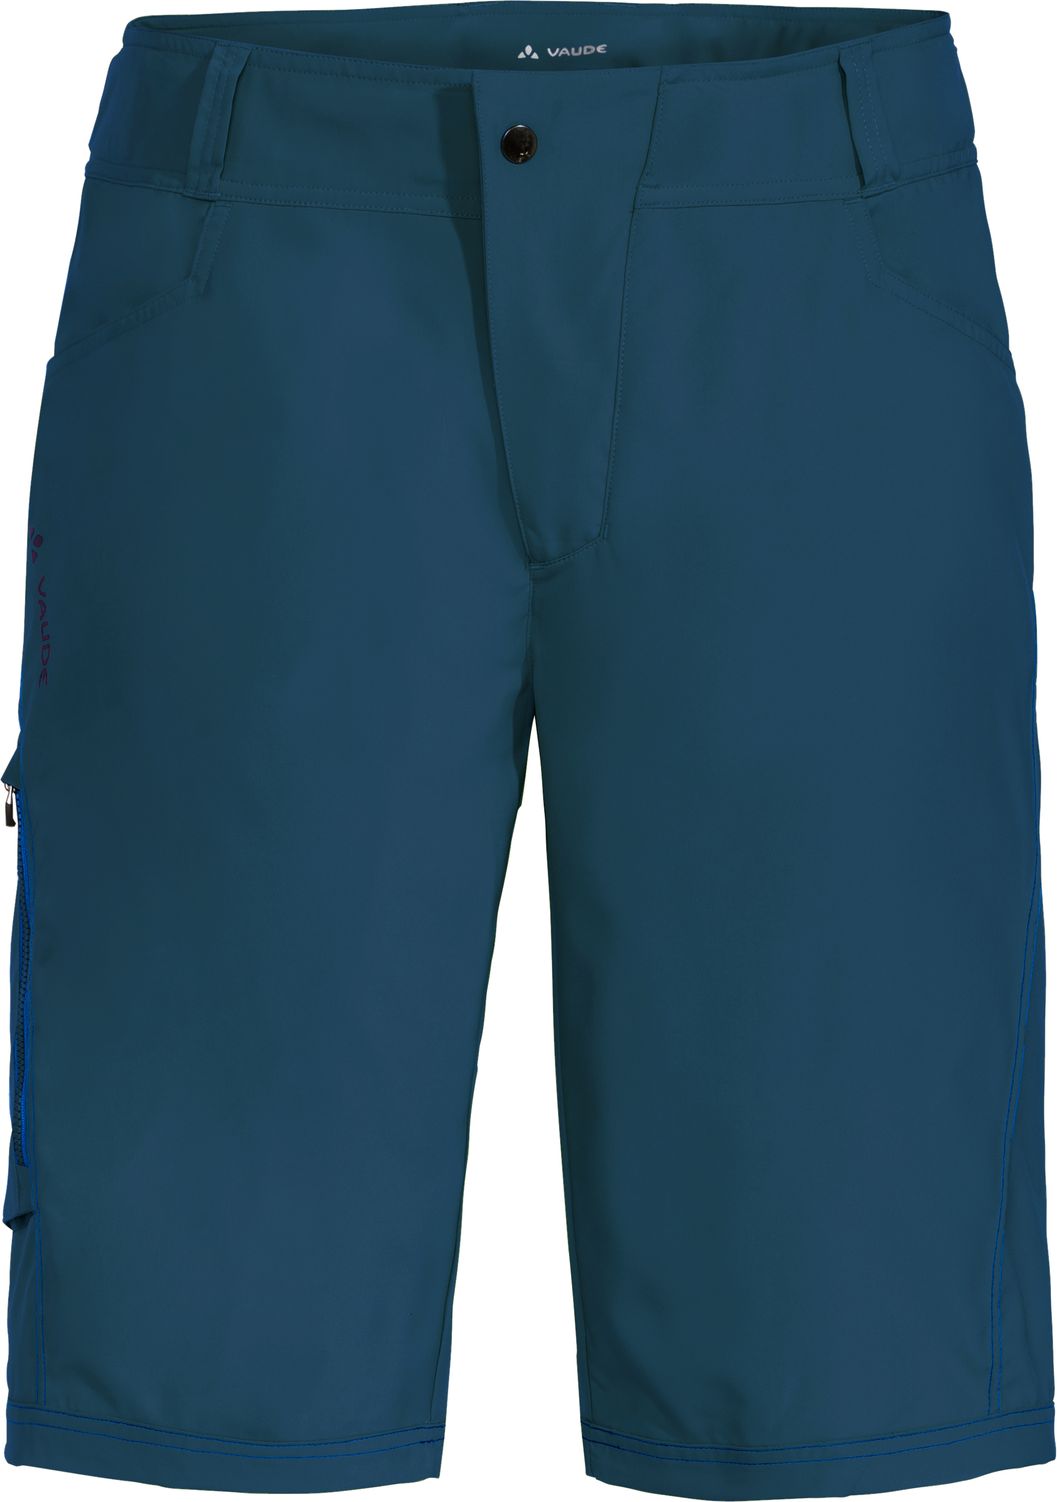 sea | Ledro bei Men\'s L baltic Shorts kaufen online |